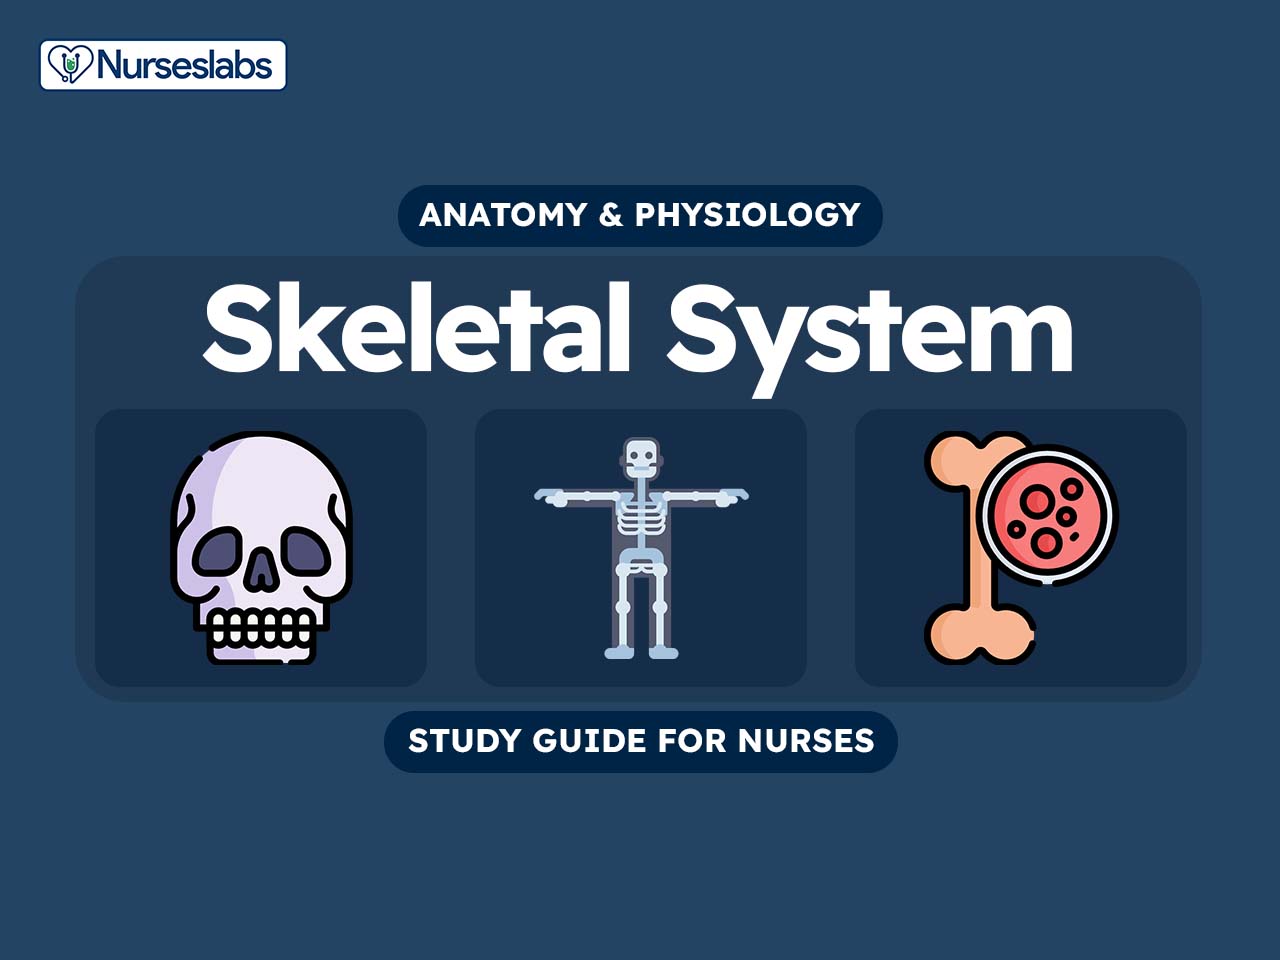 https://nurseslabs.com/wp-content/uploads/2017/06/Skeletal-System-Anatomy-and-Physiology-Nursing-Study-Guide.jpg